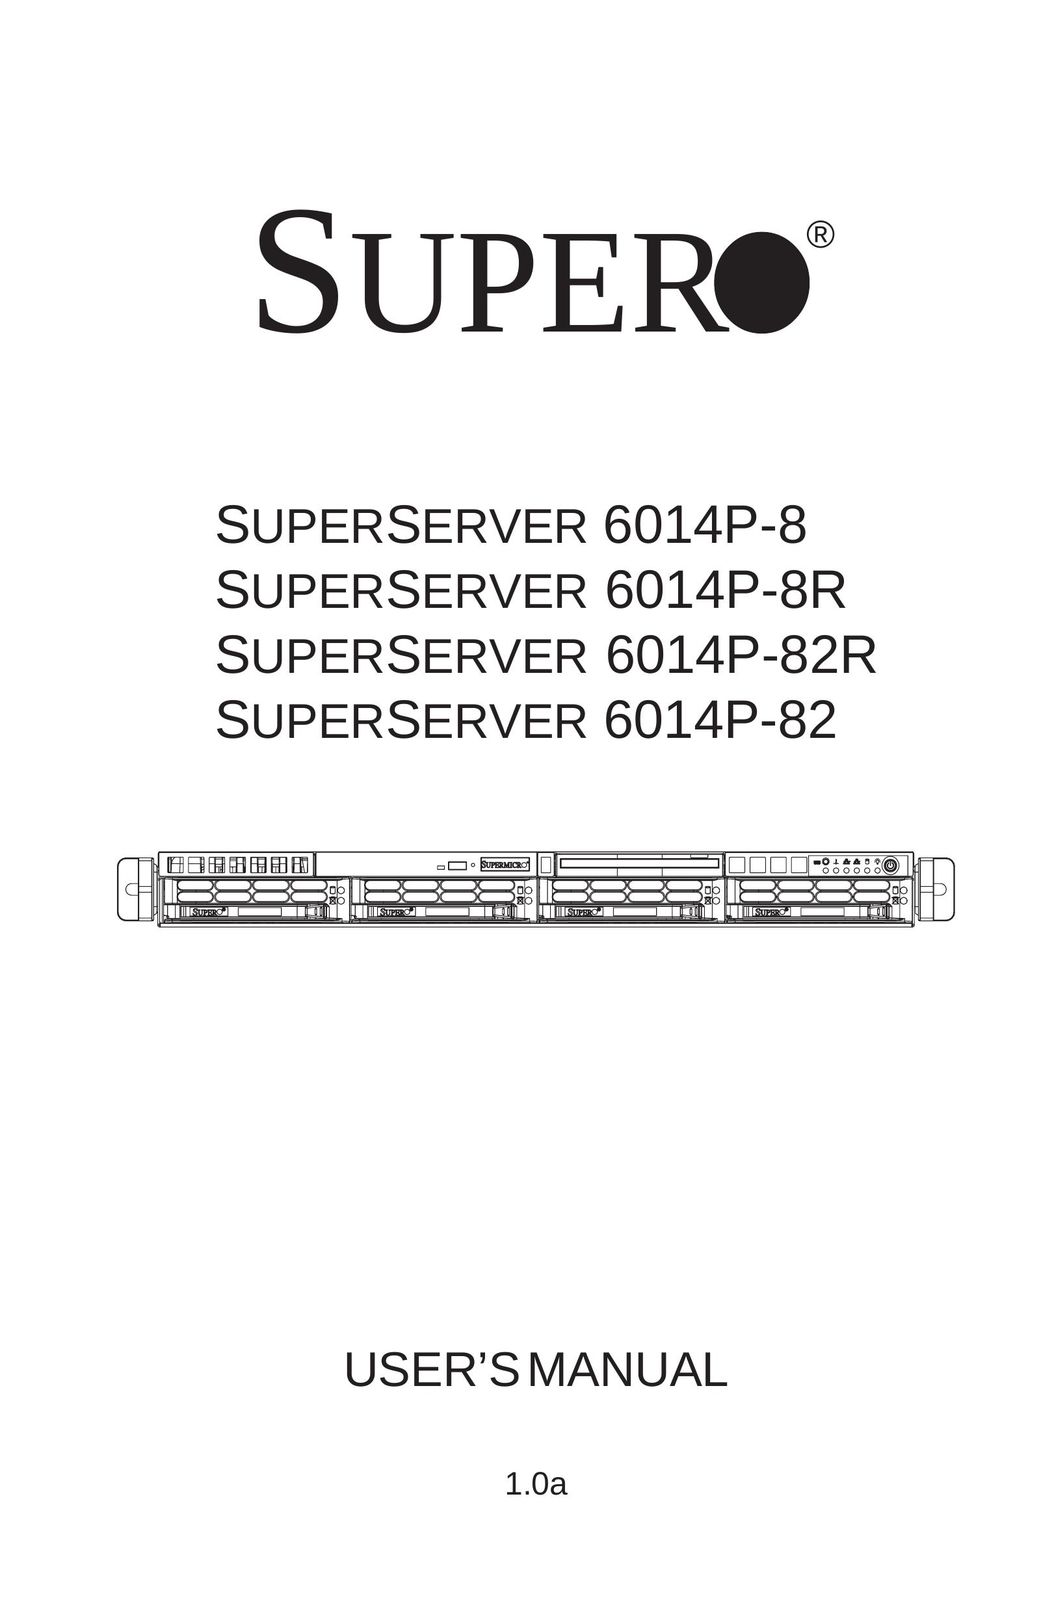 SUPER MICRO Computer 6014P-82R Home Theater Server User Manual